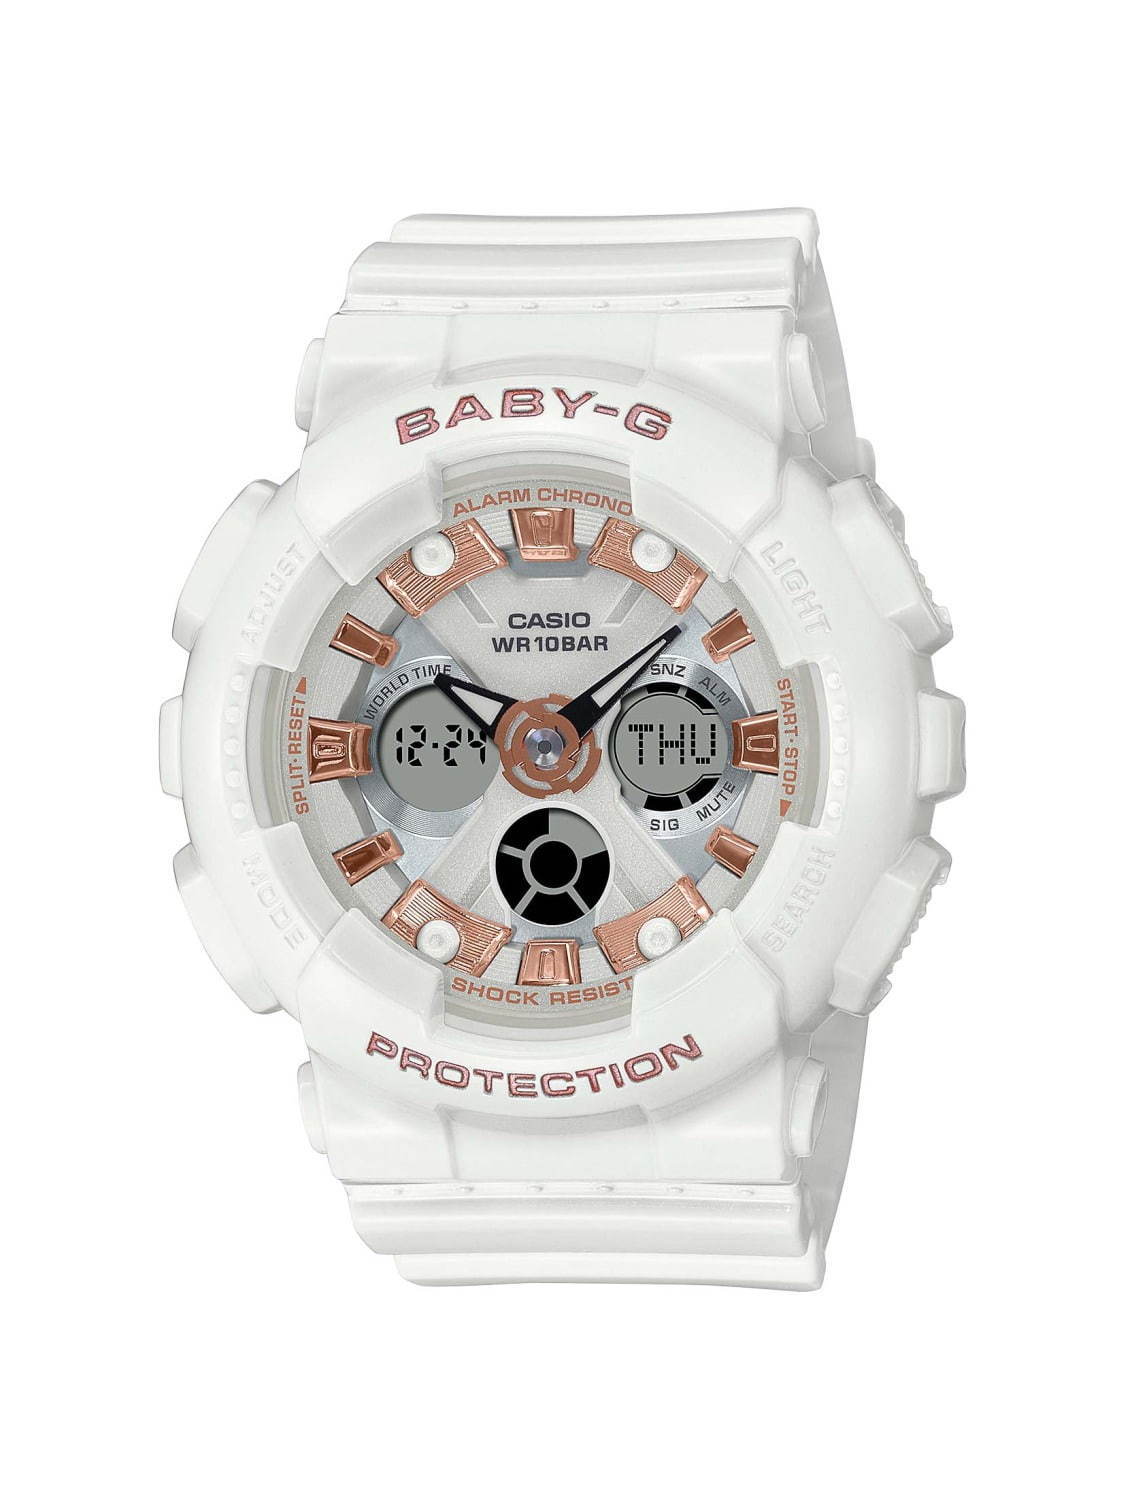 G-SHOCK&BABY-Gのペアウオッチ、“バラの花”を配した腕時計や愛の言葉を散りばめたデザイン｜写真1